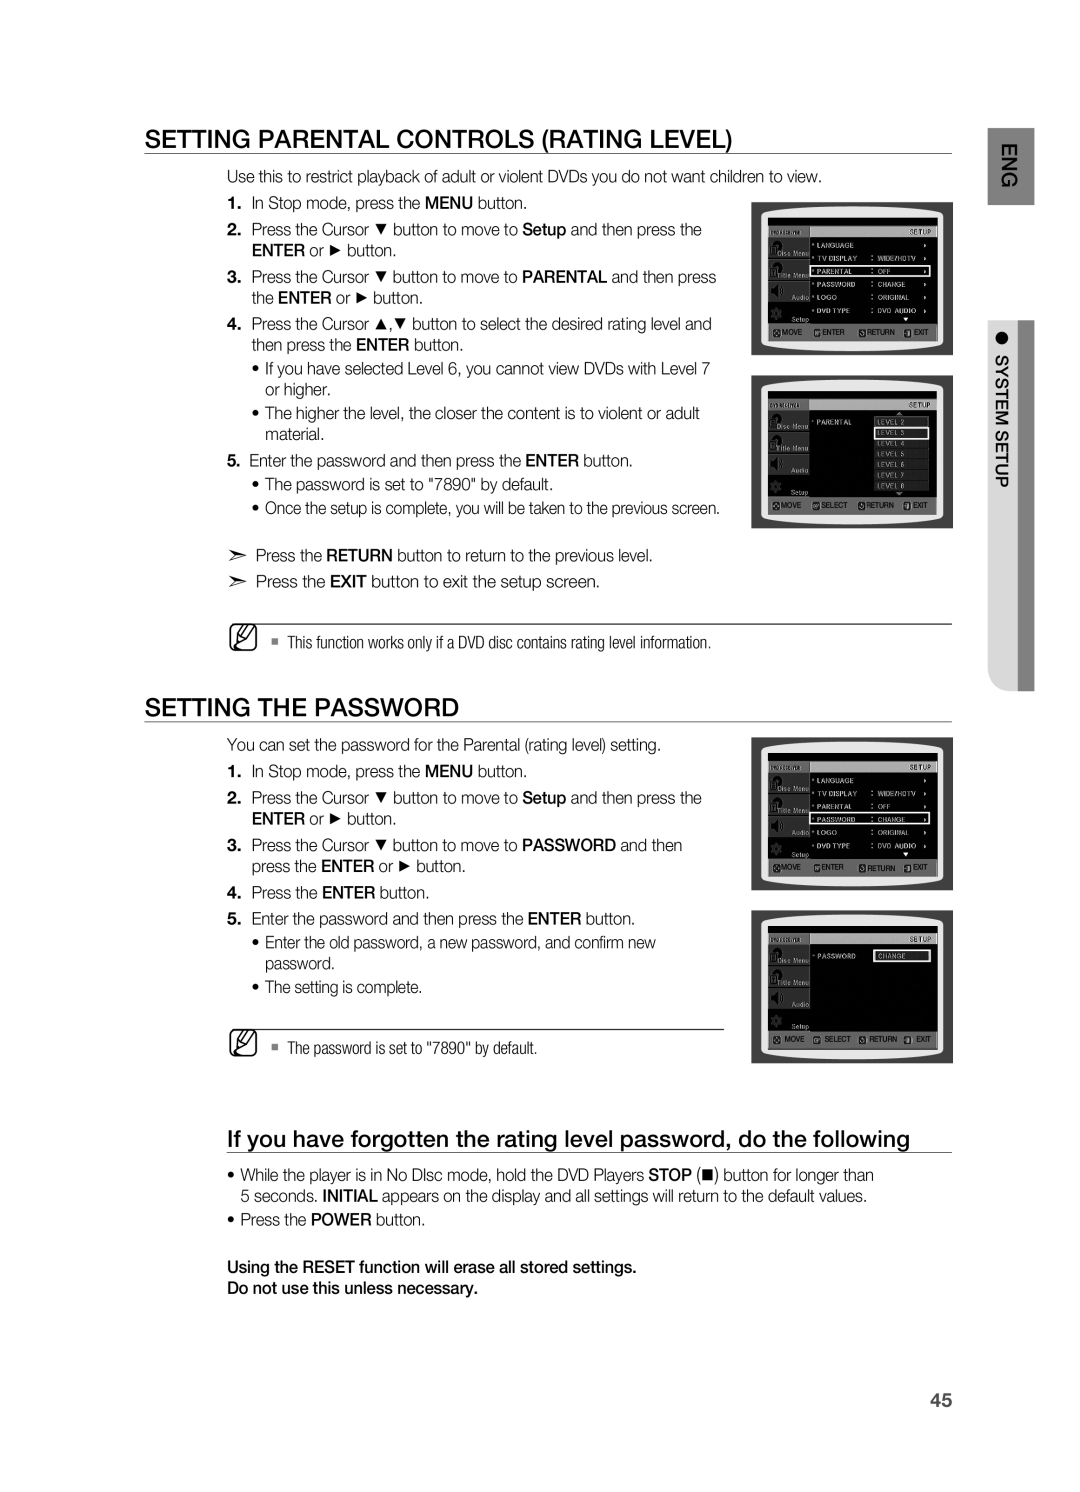 Samsung HT-X810 user manual Setting Parental Controls Rating Level, Setting the Password 